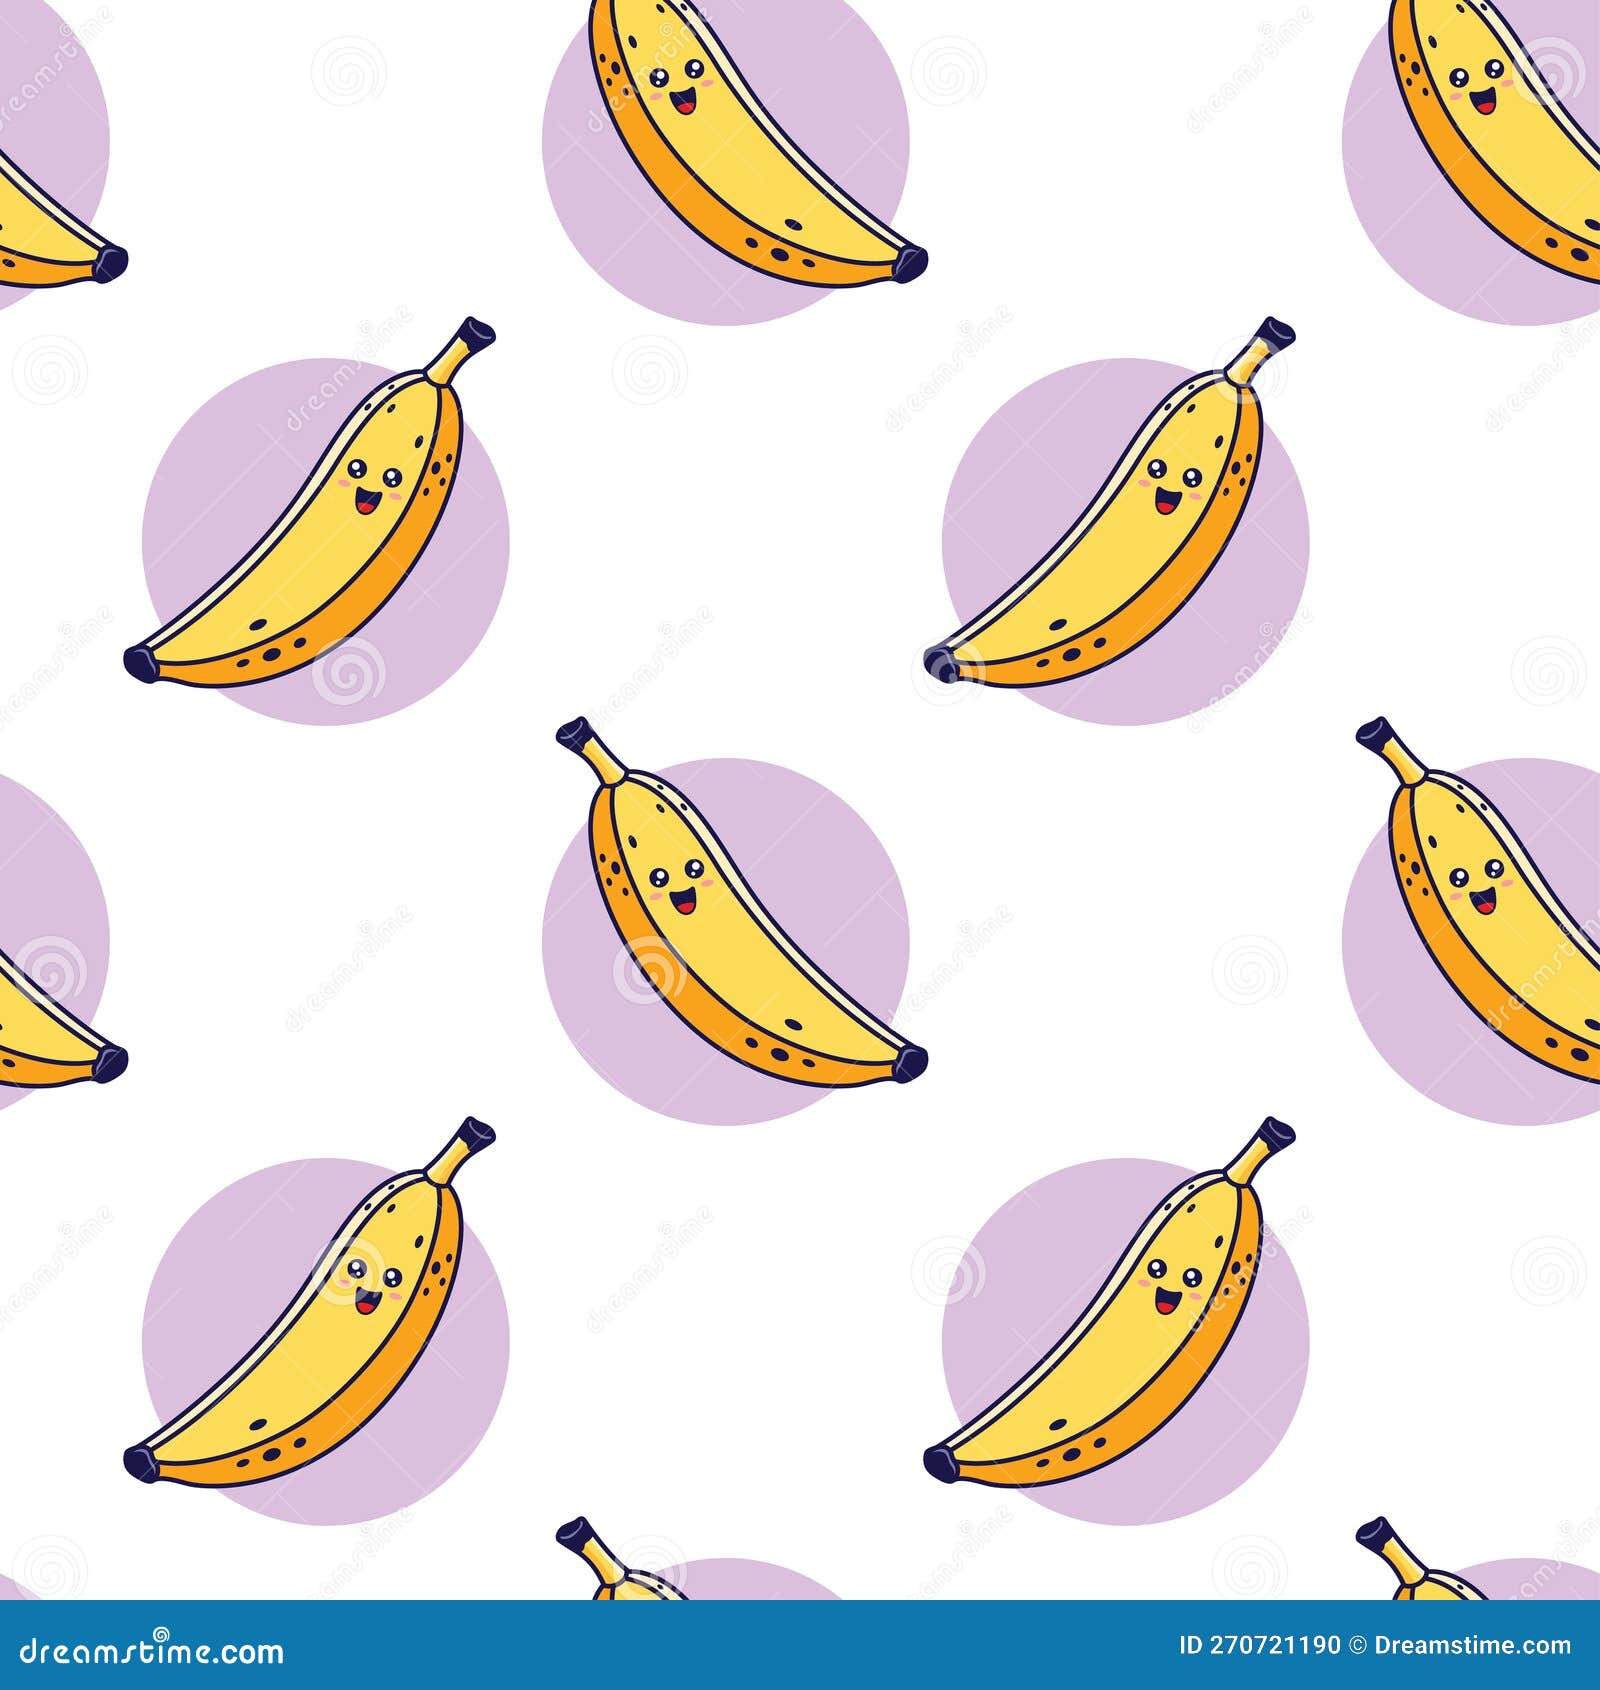 Cute Yellow Kawaii Banana Seamless Pattern in Doodle Style. Vector Hand ...